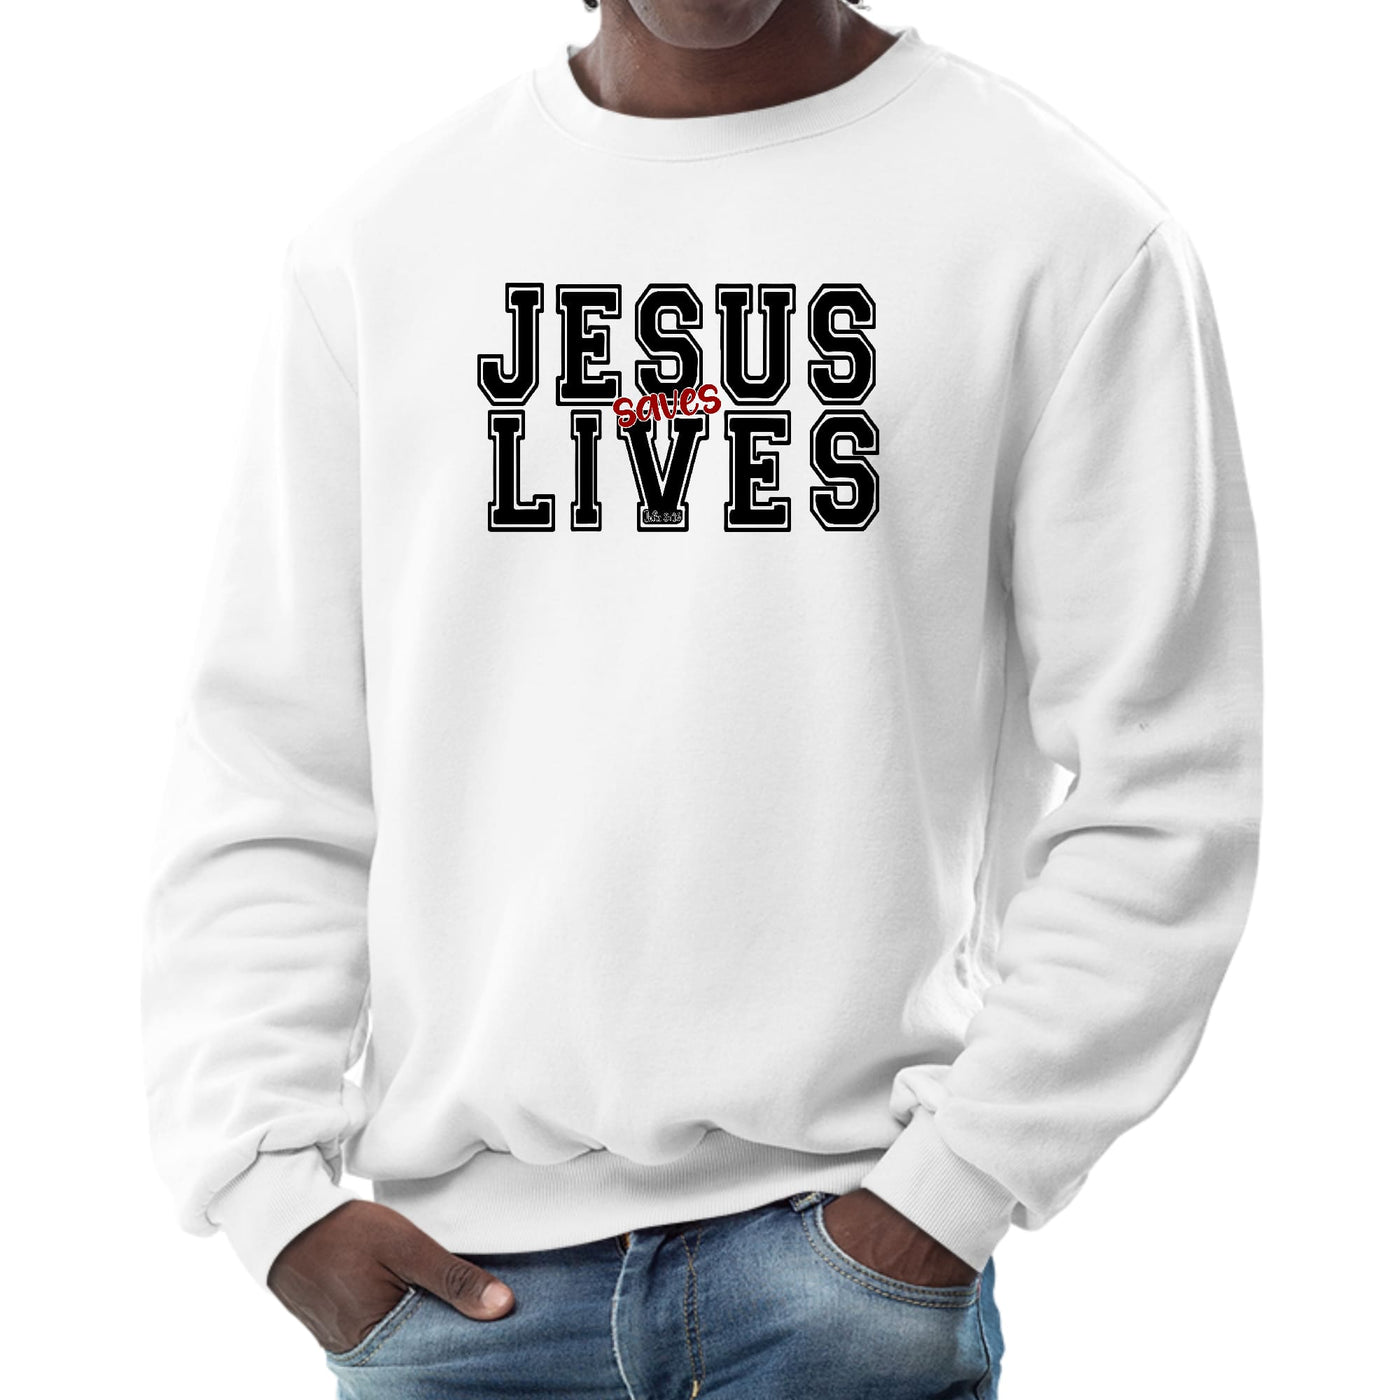 Mens Graphic Sweatshirt Jesus Saves Lives Black Red Illustration - Sweatshirts